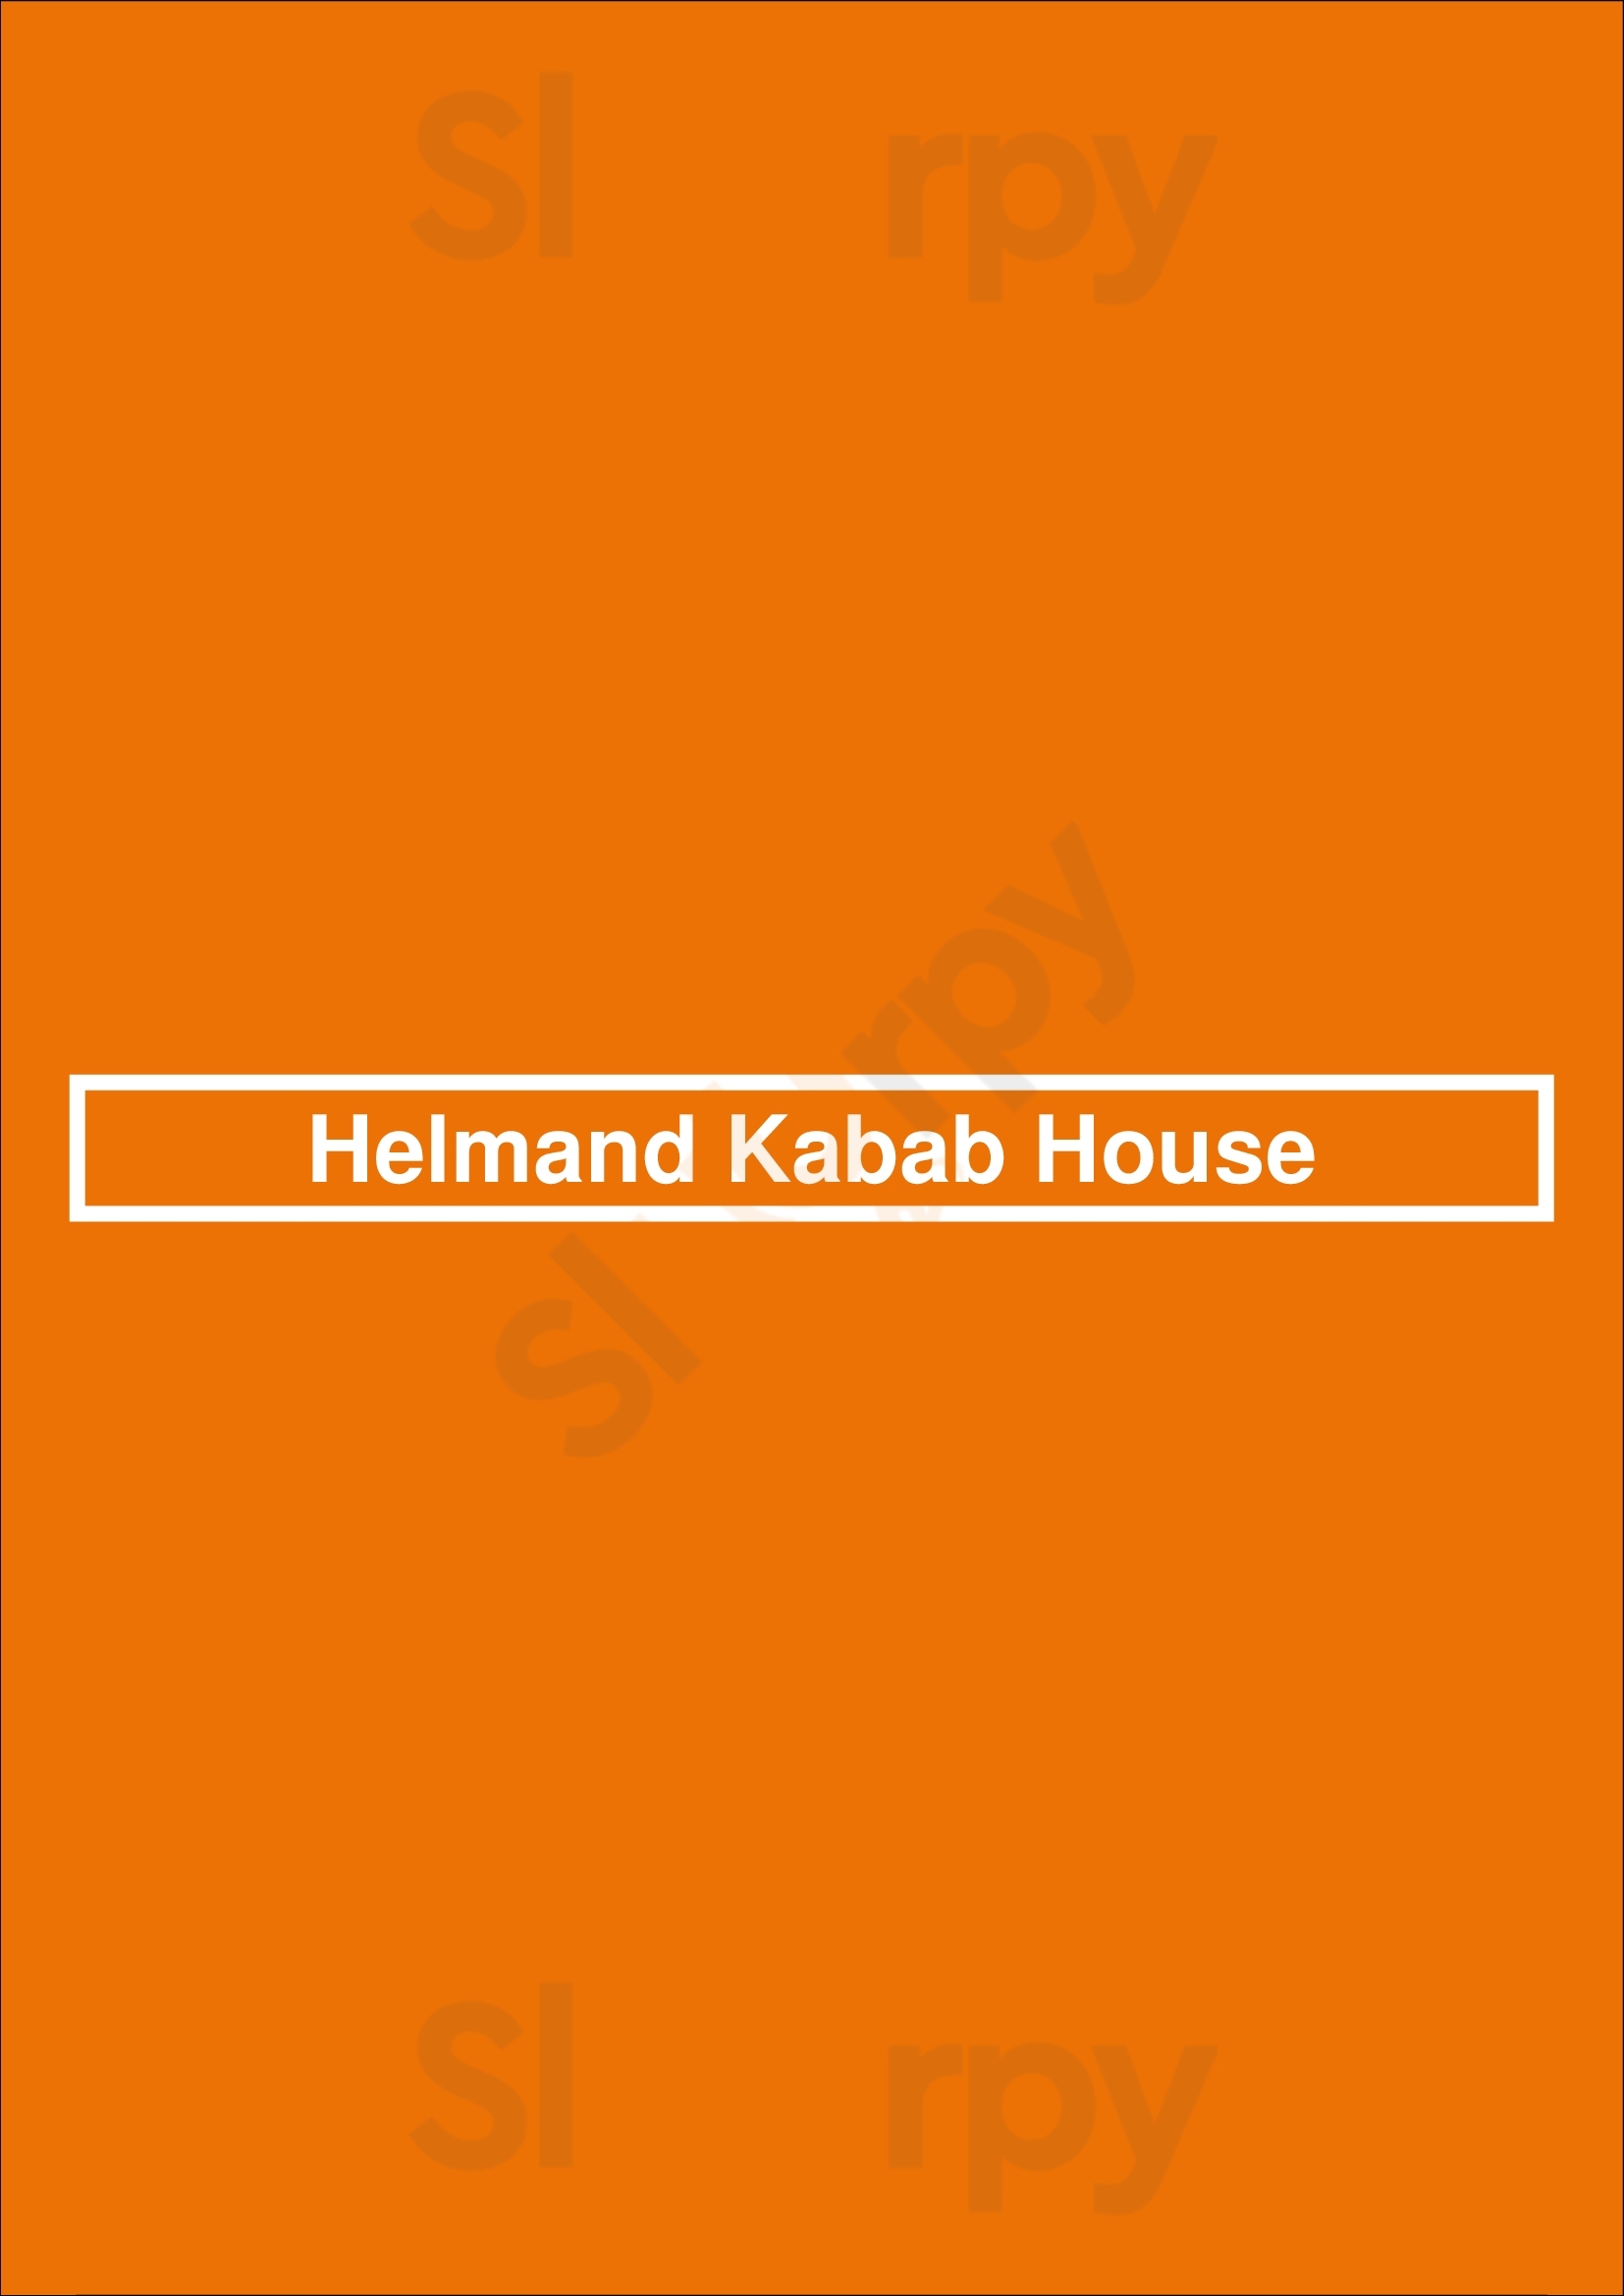 Helmand Kabab House Ajax Menu - 1